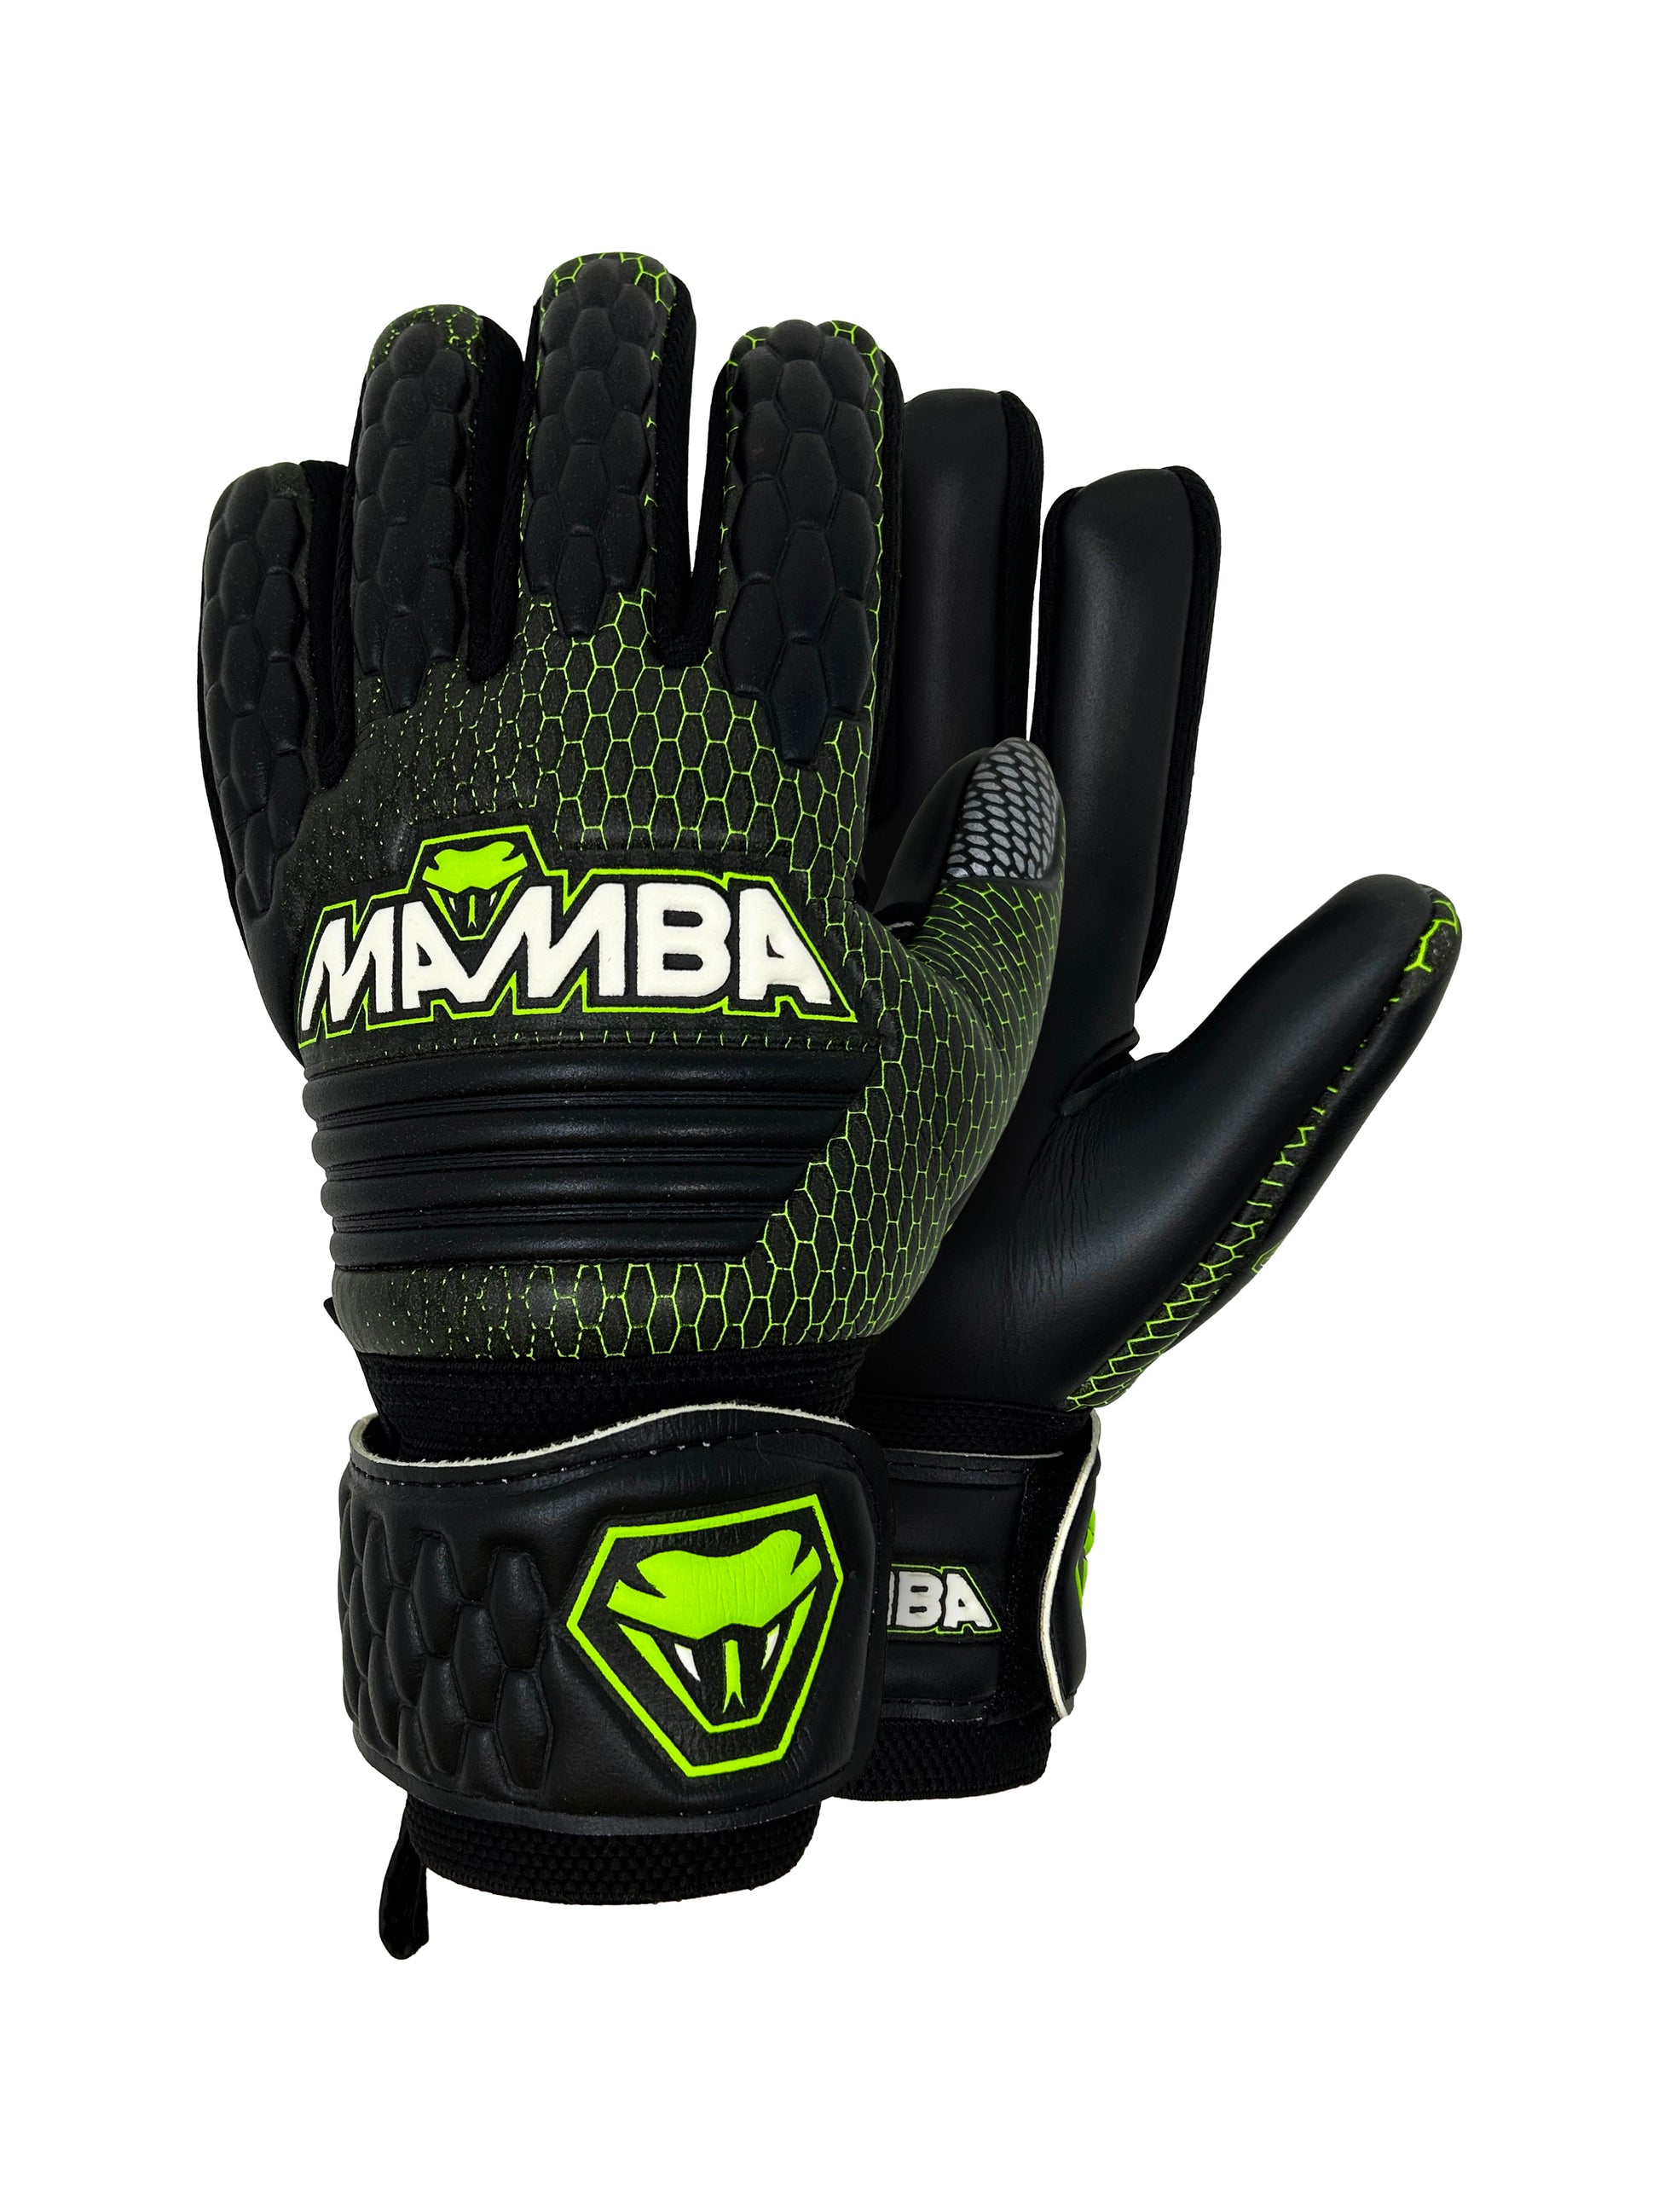 Black Mamba Pro Goalkeeper Gloves